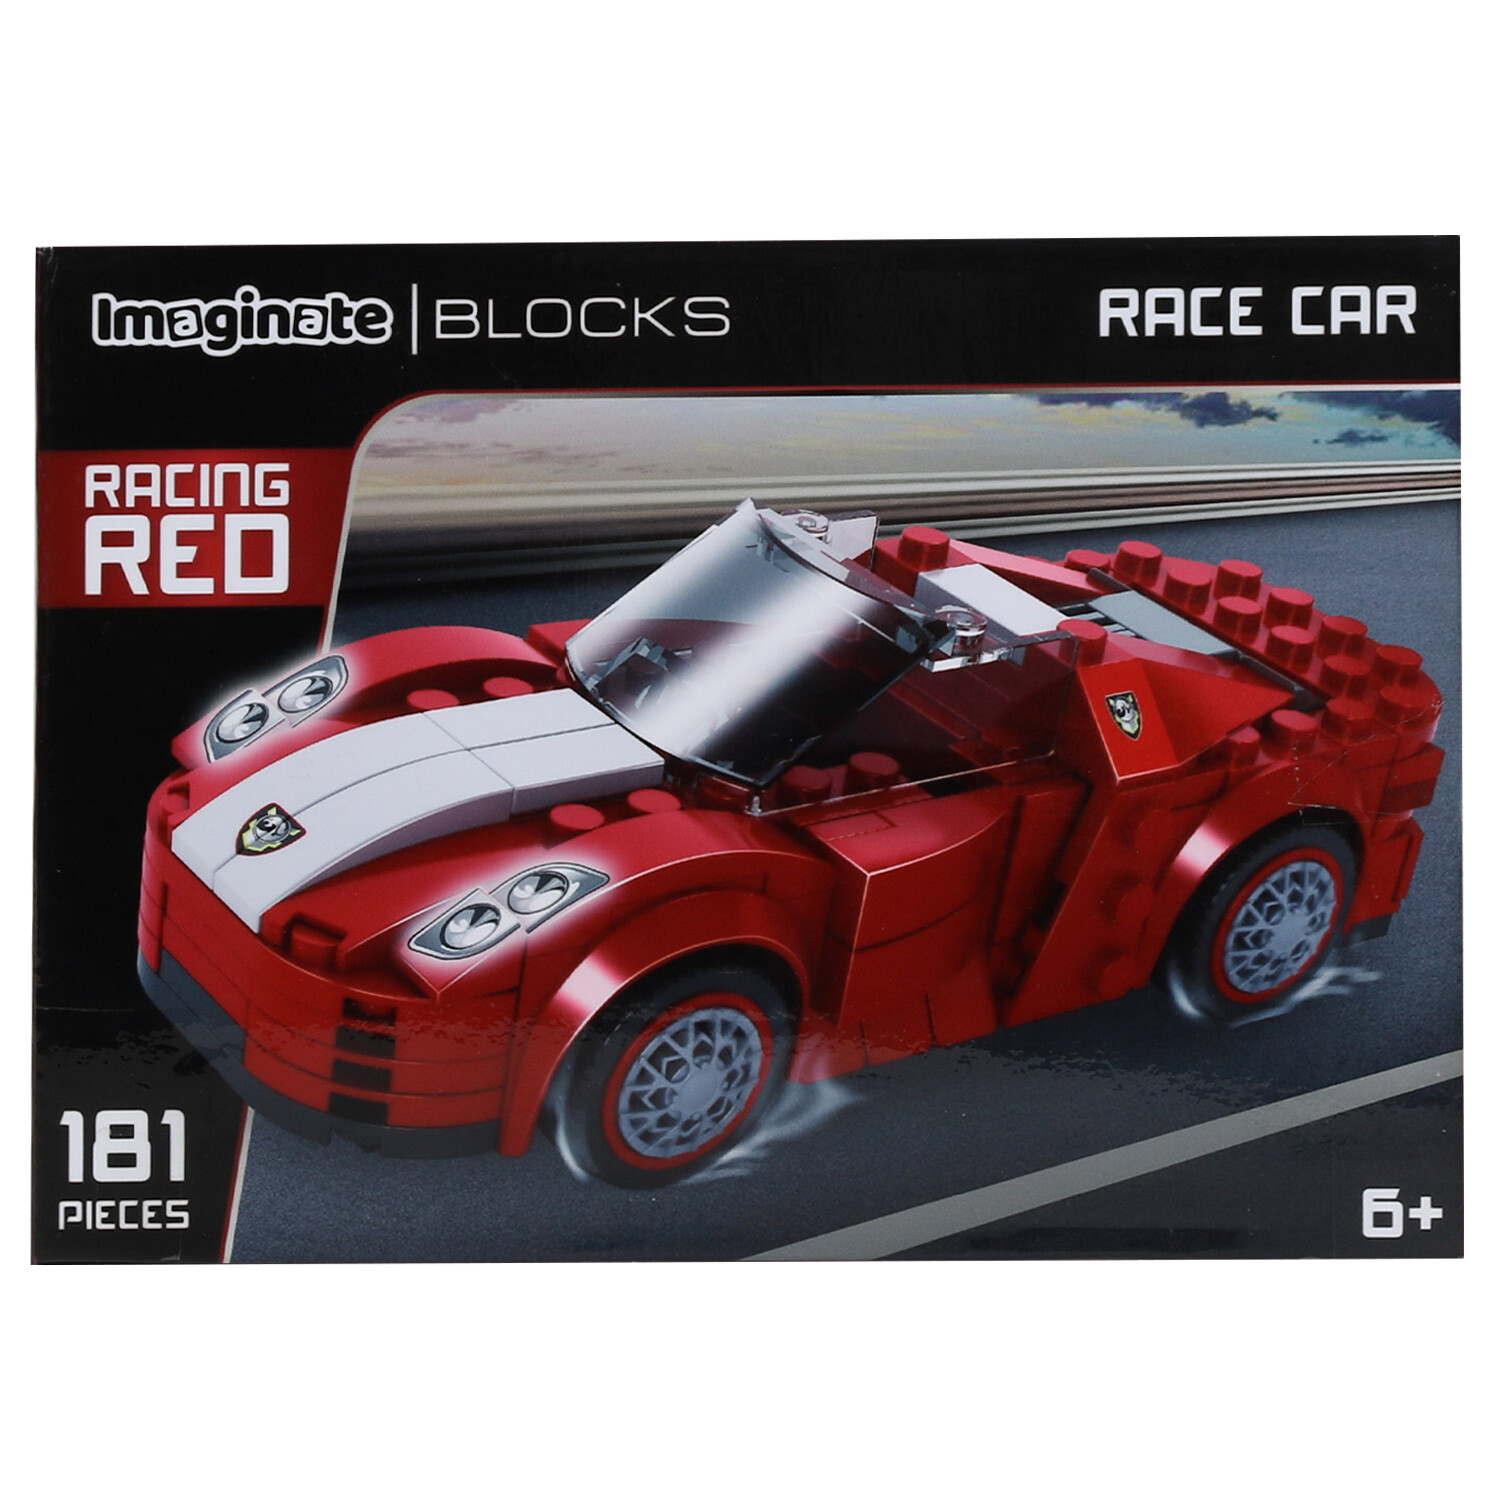 Imaginate Blocks Race Car Image 2